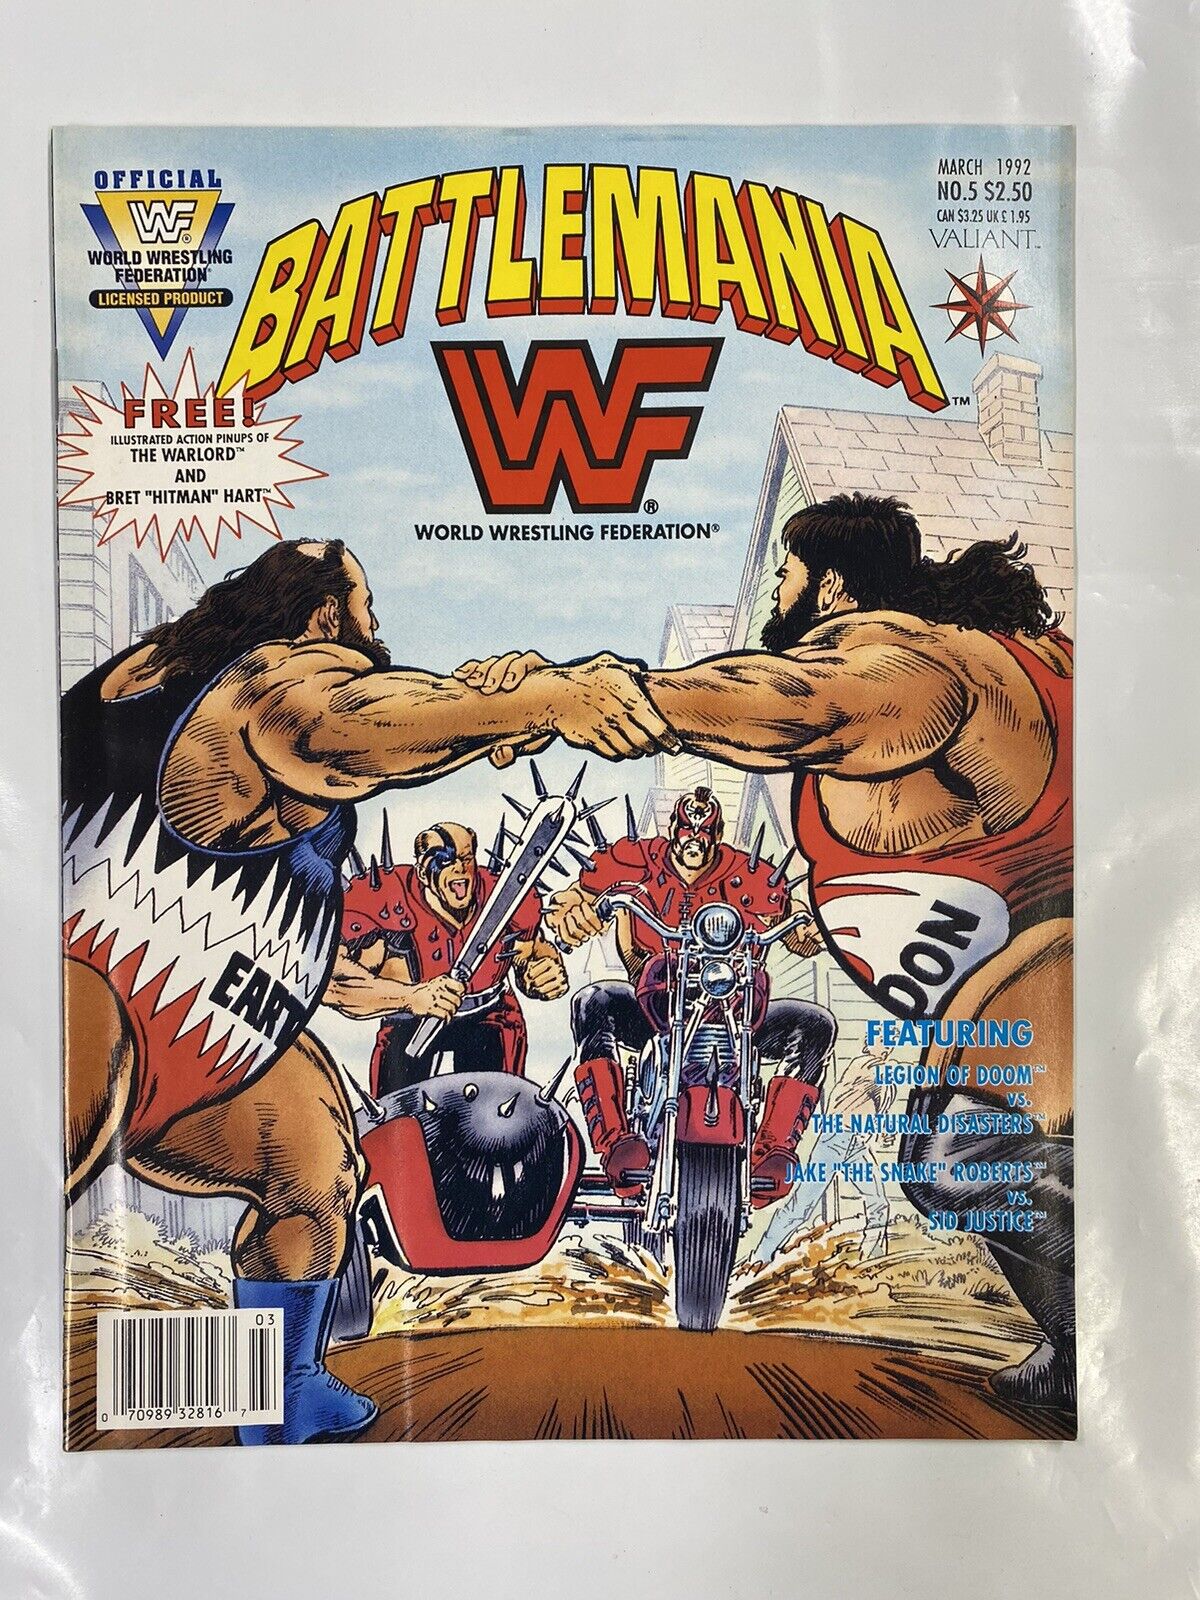 Battlemania Wwf Comic Book No 5 Valiant March 1992 Wrestling Nice Shape Clean 